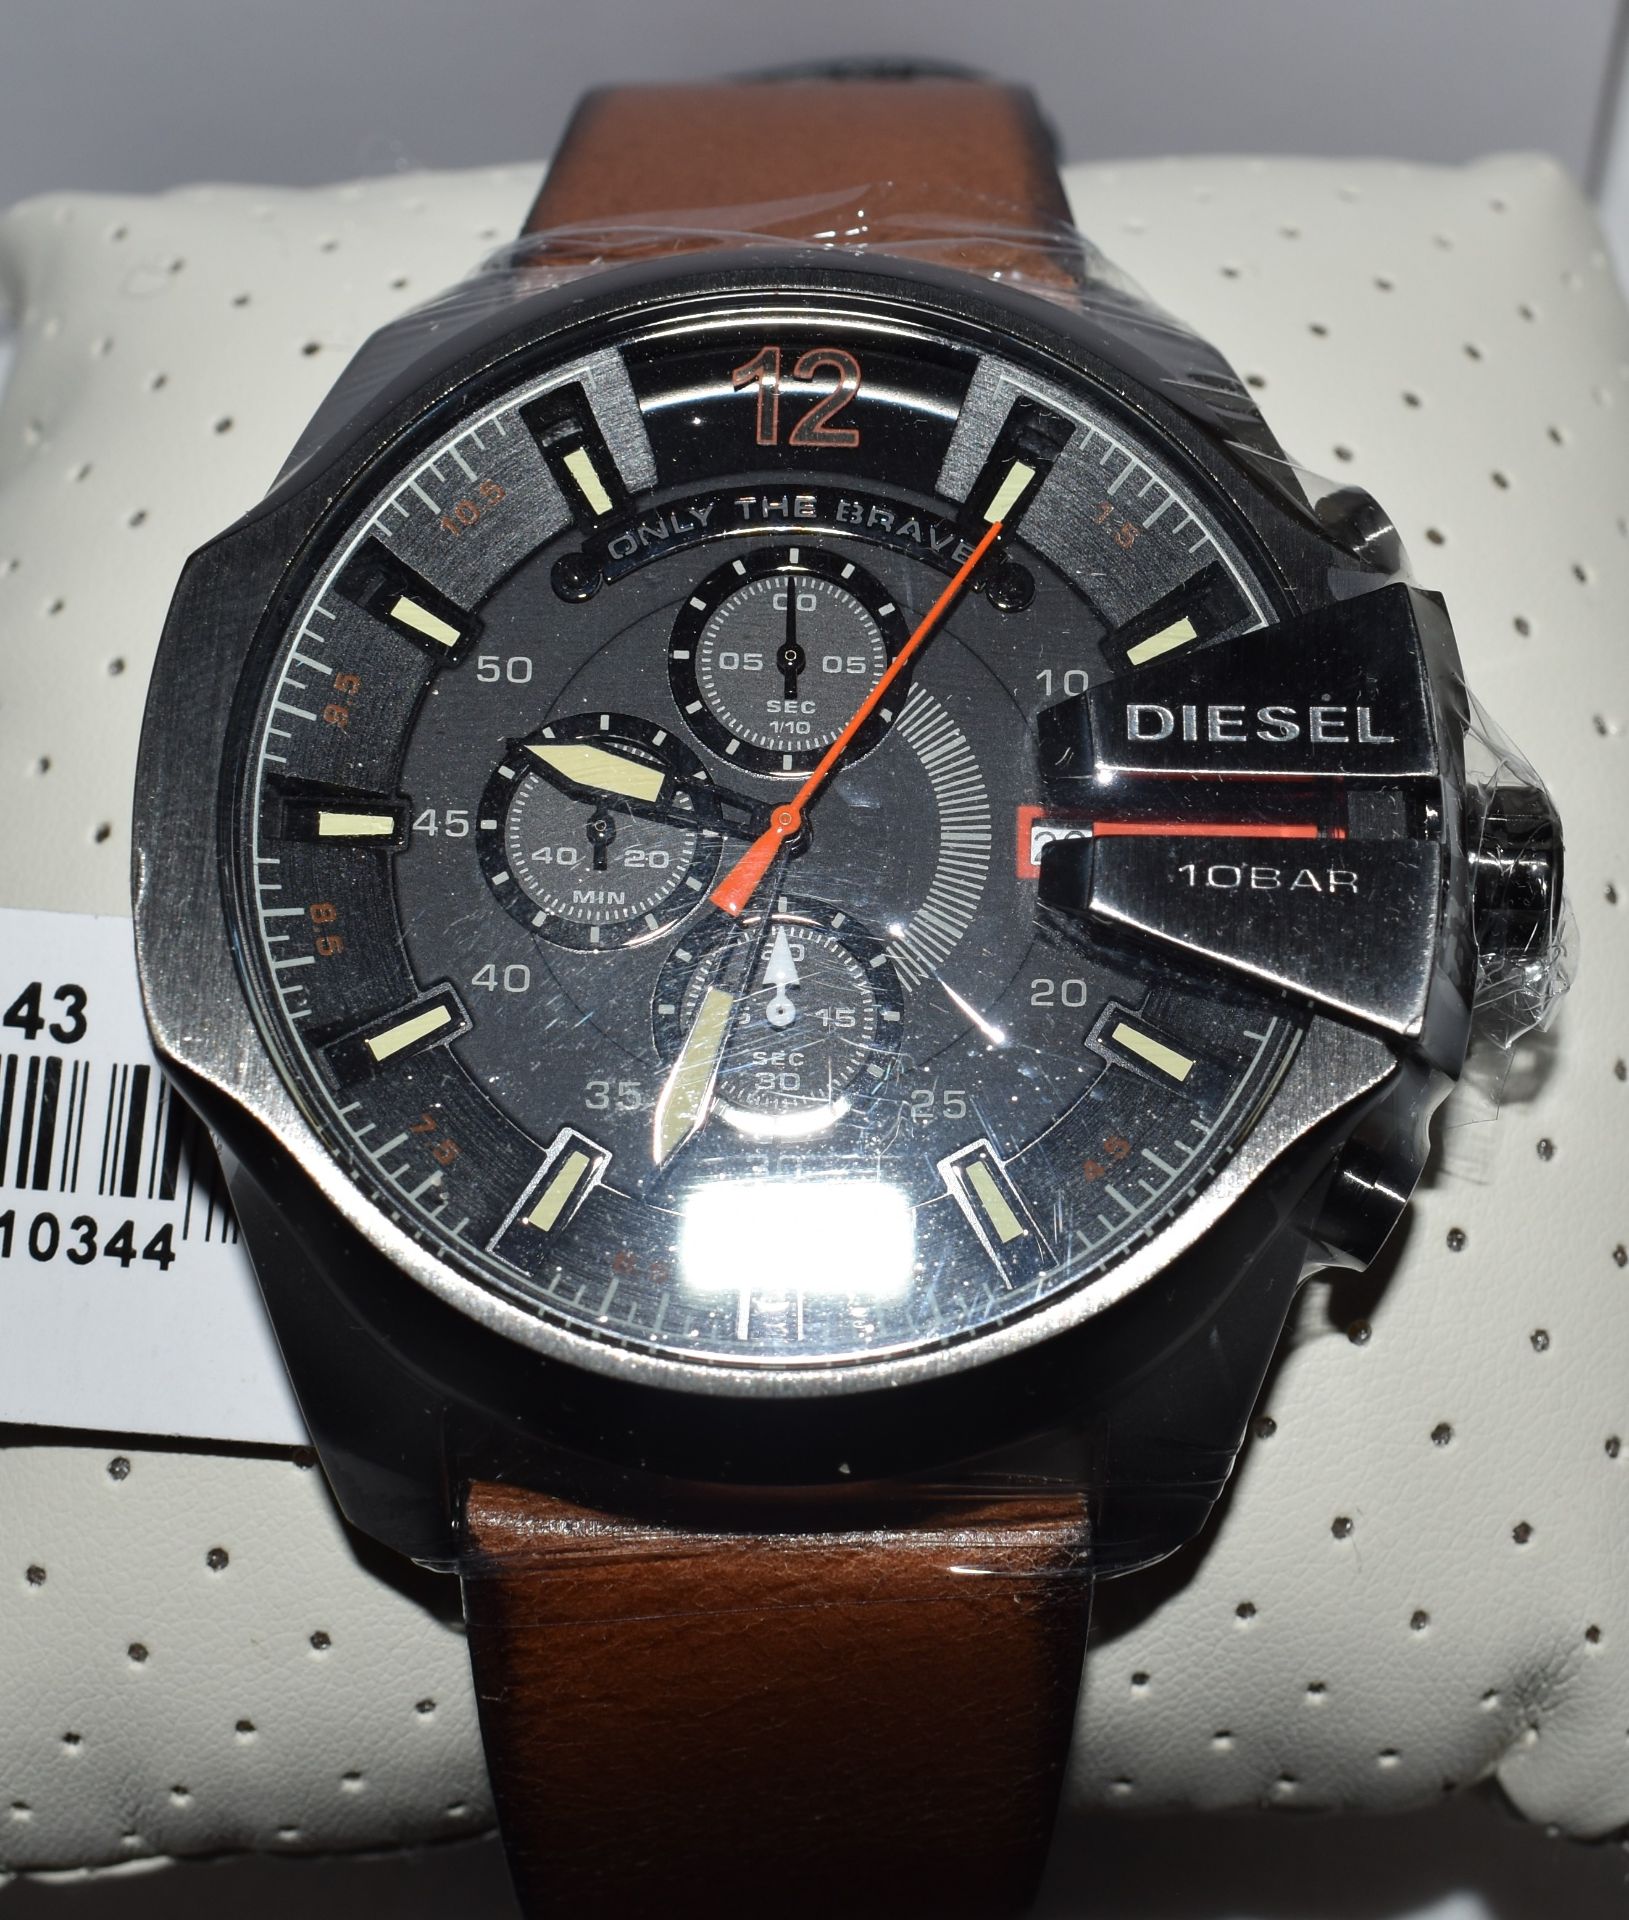 Diesel Men's Watch DZ4343 - Image 2 of 3